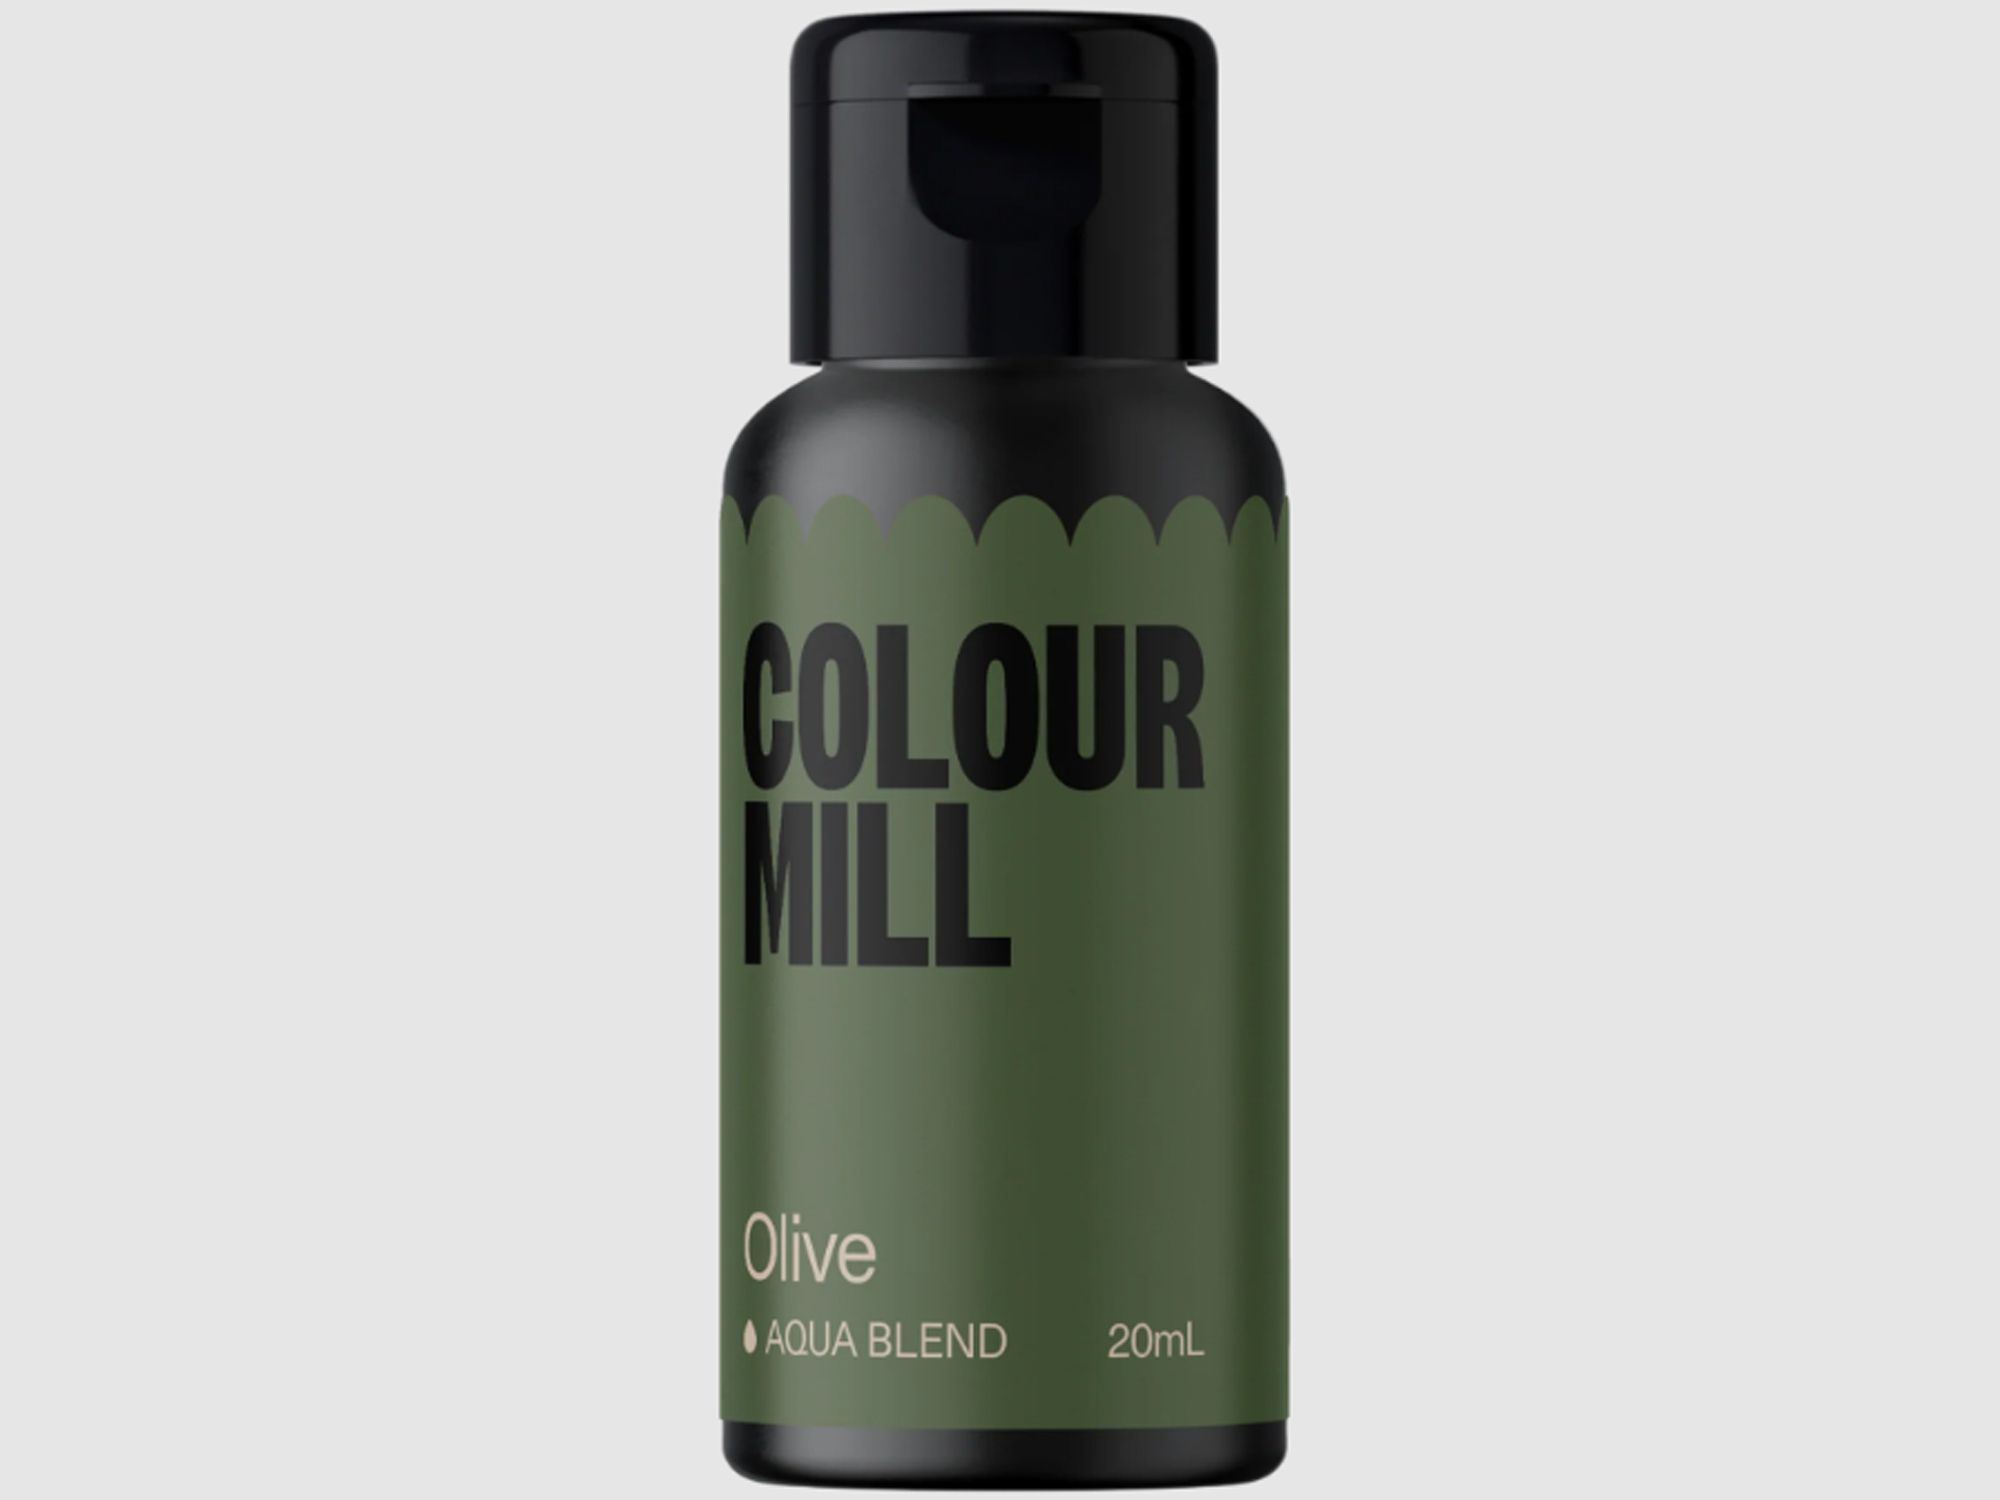 Colour Mill Olive (Aqua Blend) 20ml